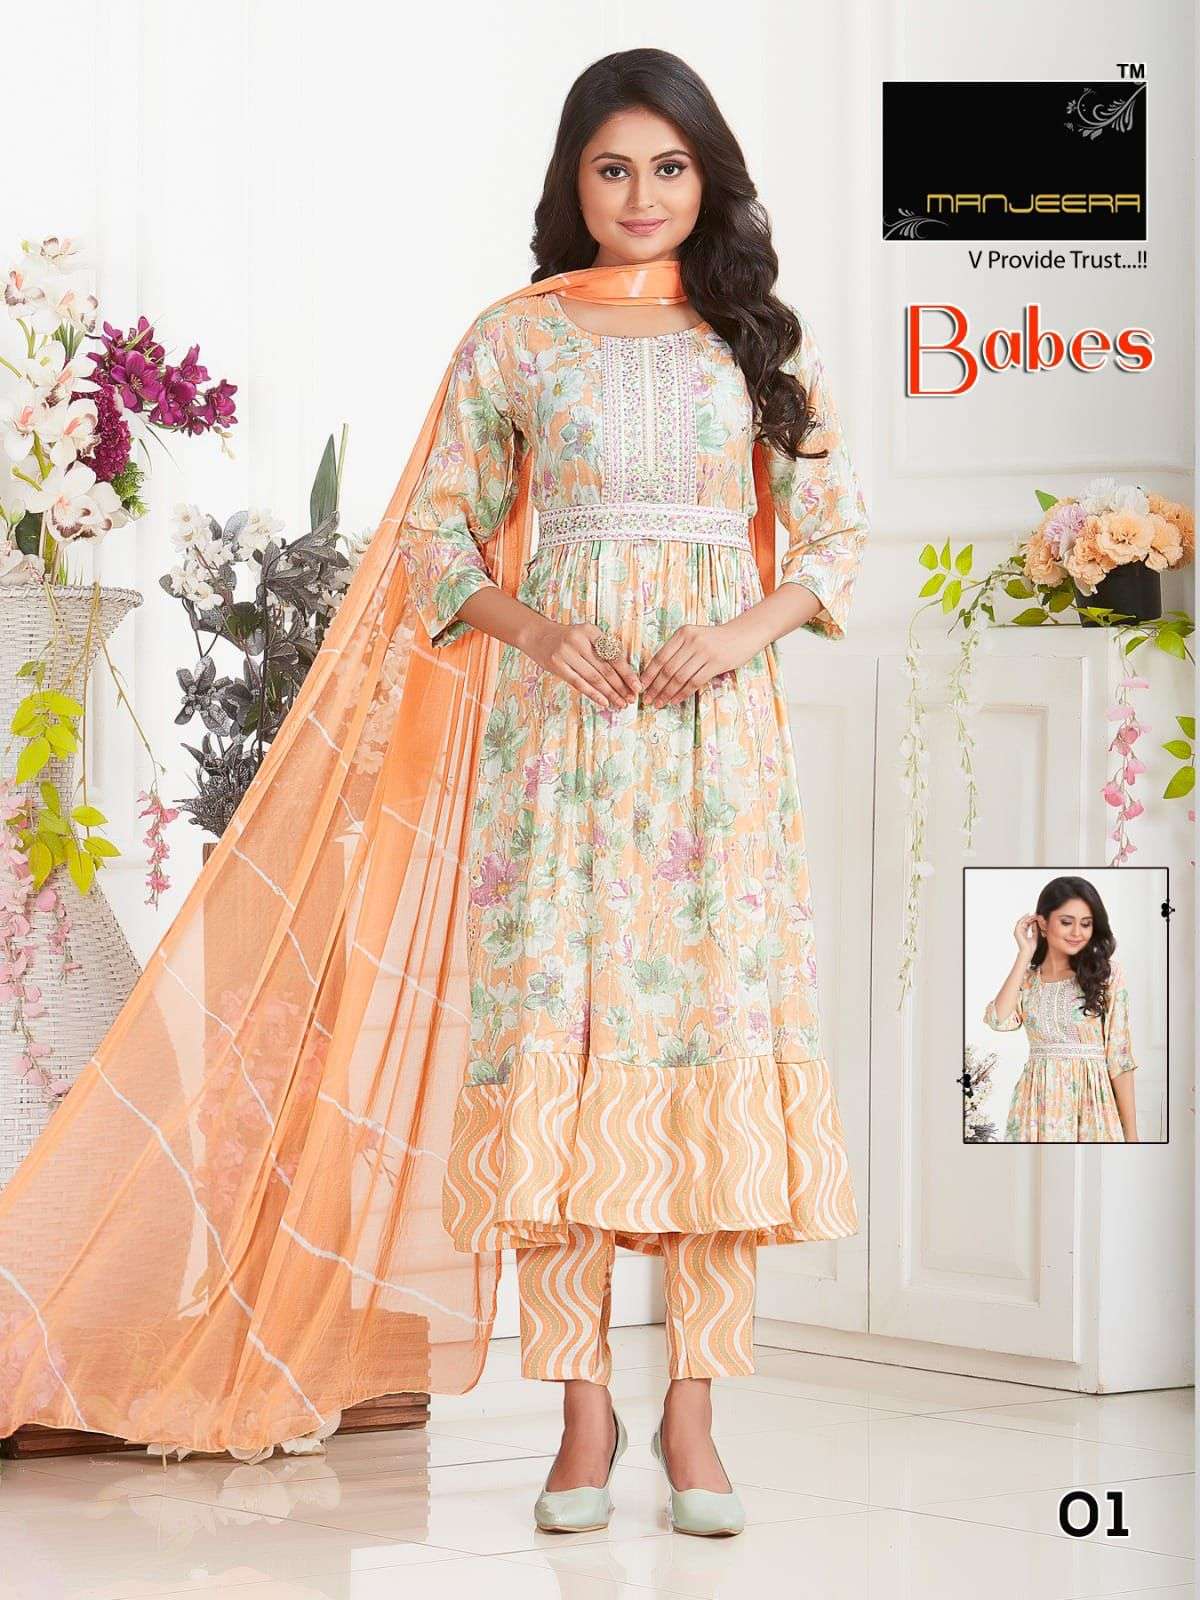 Babes Buy Manjeera Online Wholesaler Latest Collection Kurta Suit Set